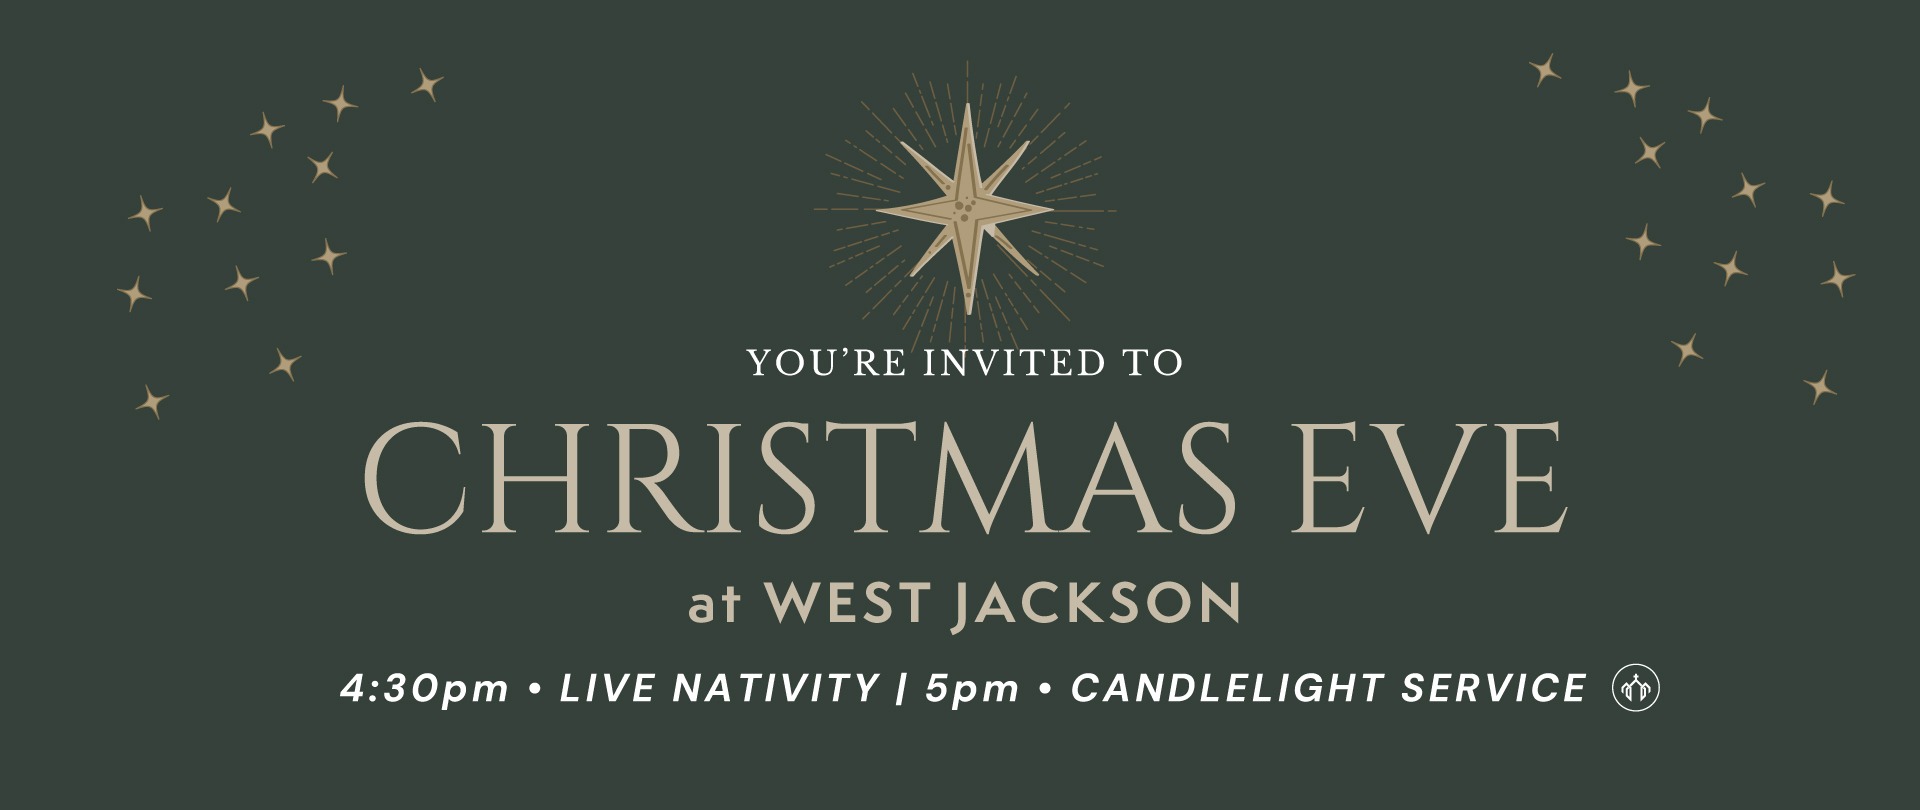 Christmas Eve at West Jackson 4:30pm - Live Nativity | 5pm - Candlelight Service